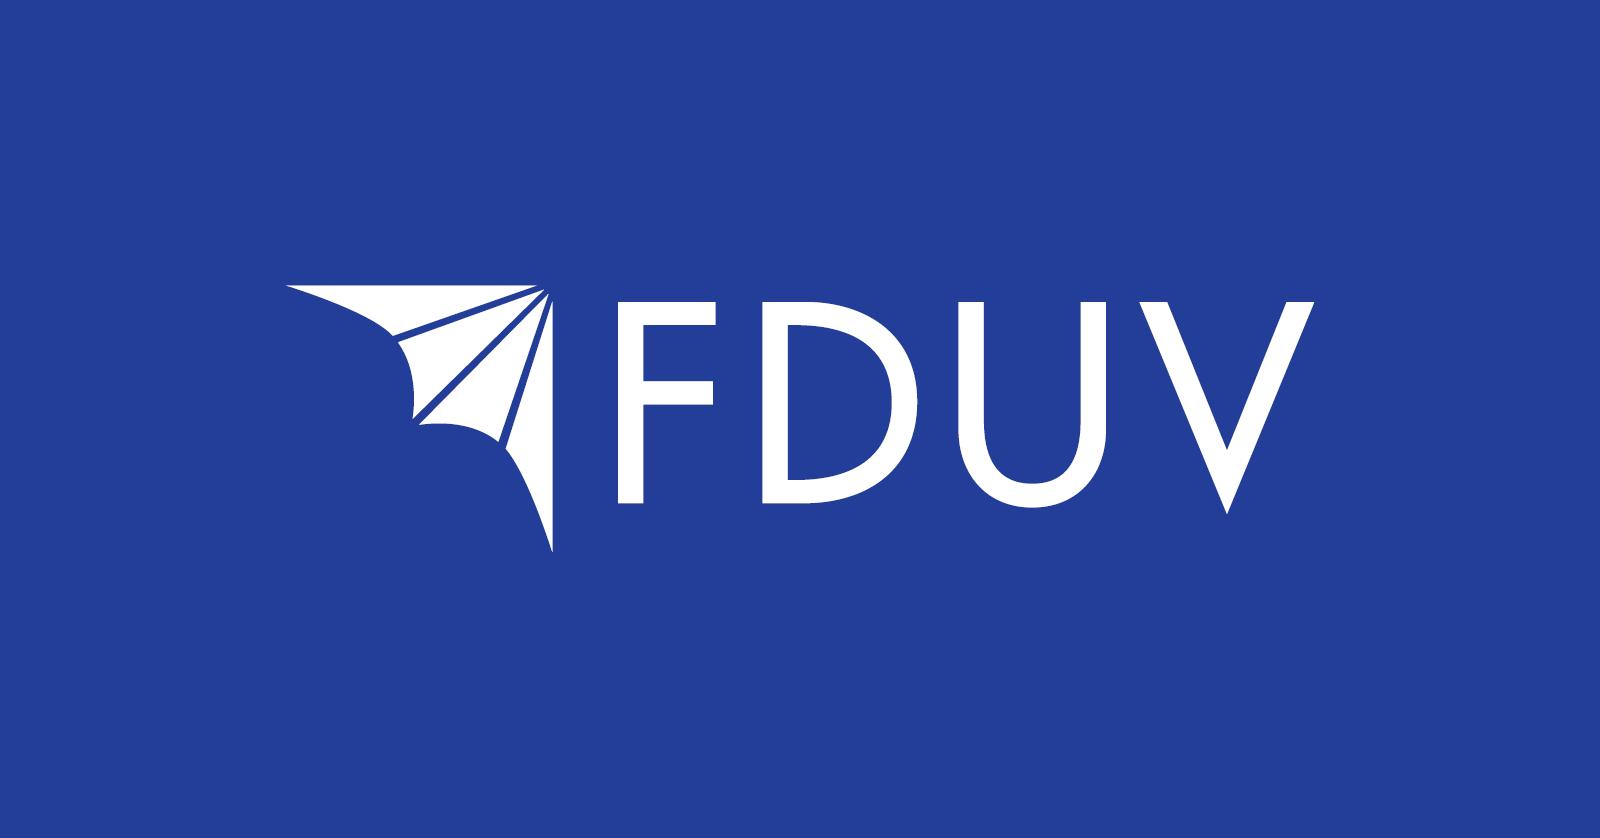 FDUV:s logotyp